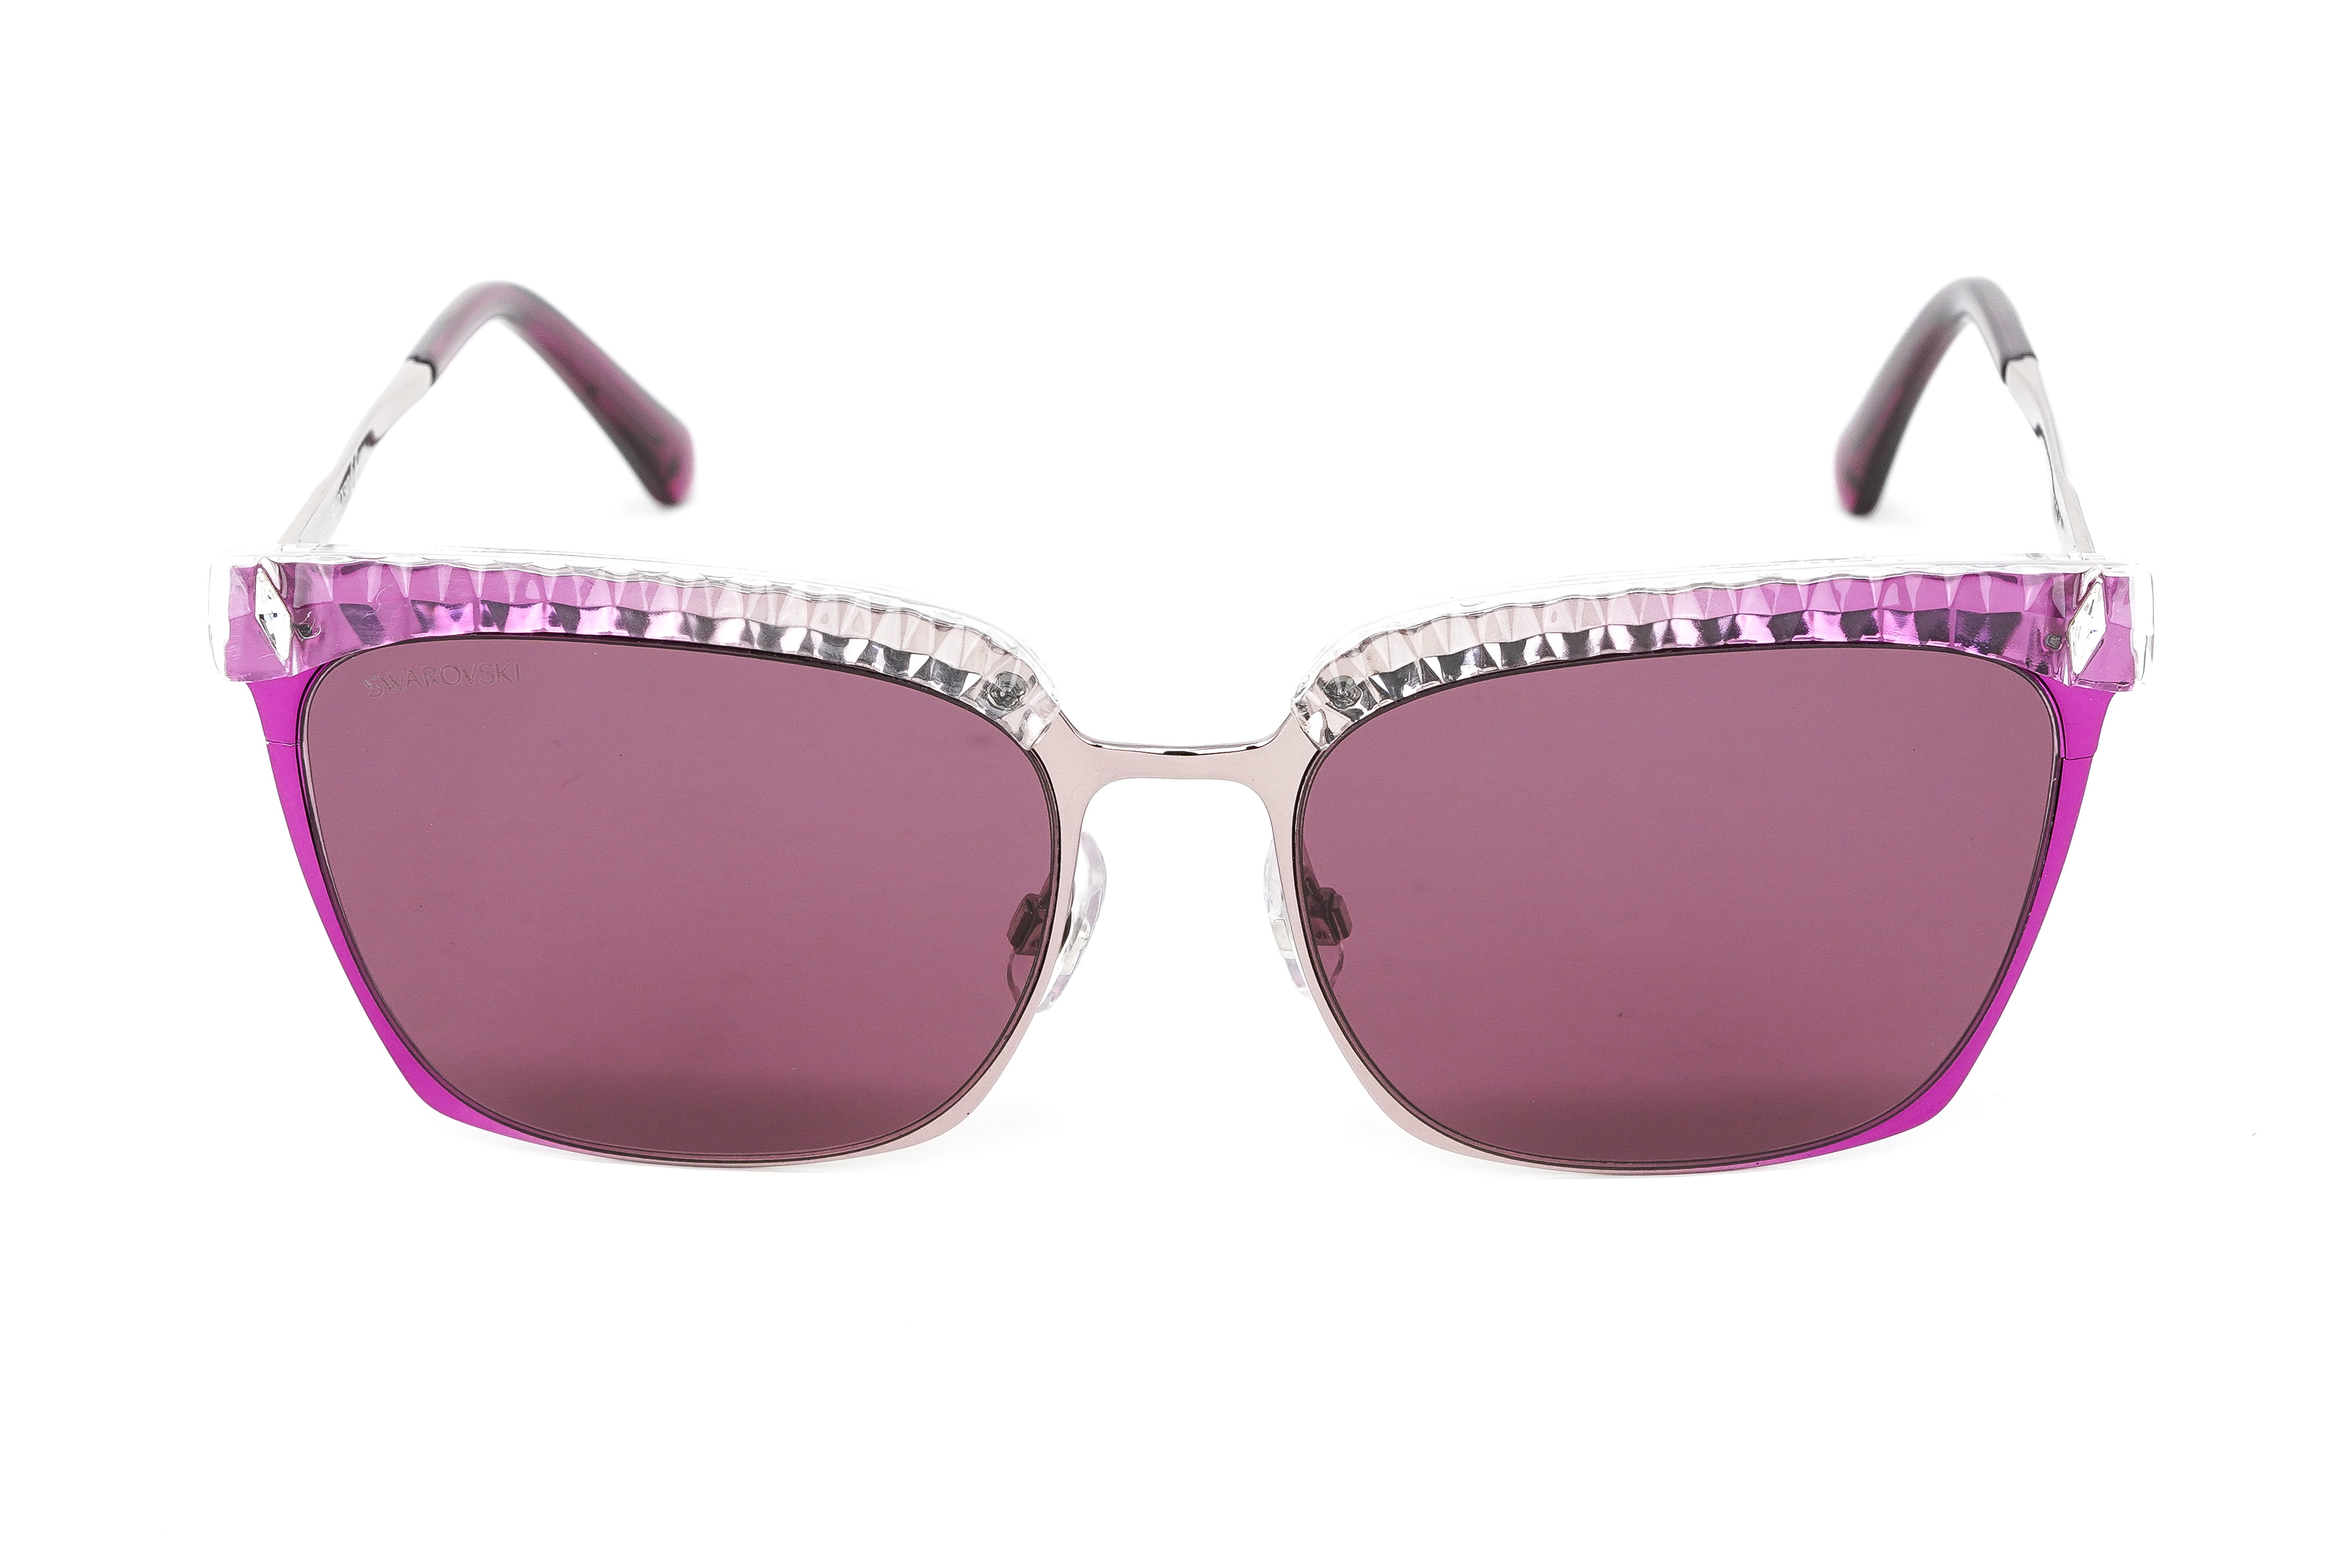  Sunglasses Swarovski SK 0387 72S Shiny Pink/Bordeaux :  Clothing, Shoes & Jewelry